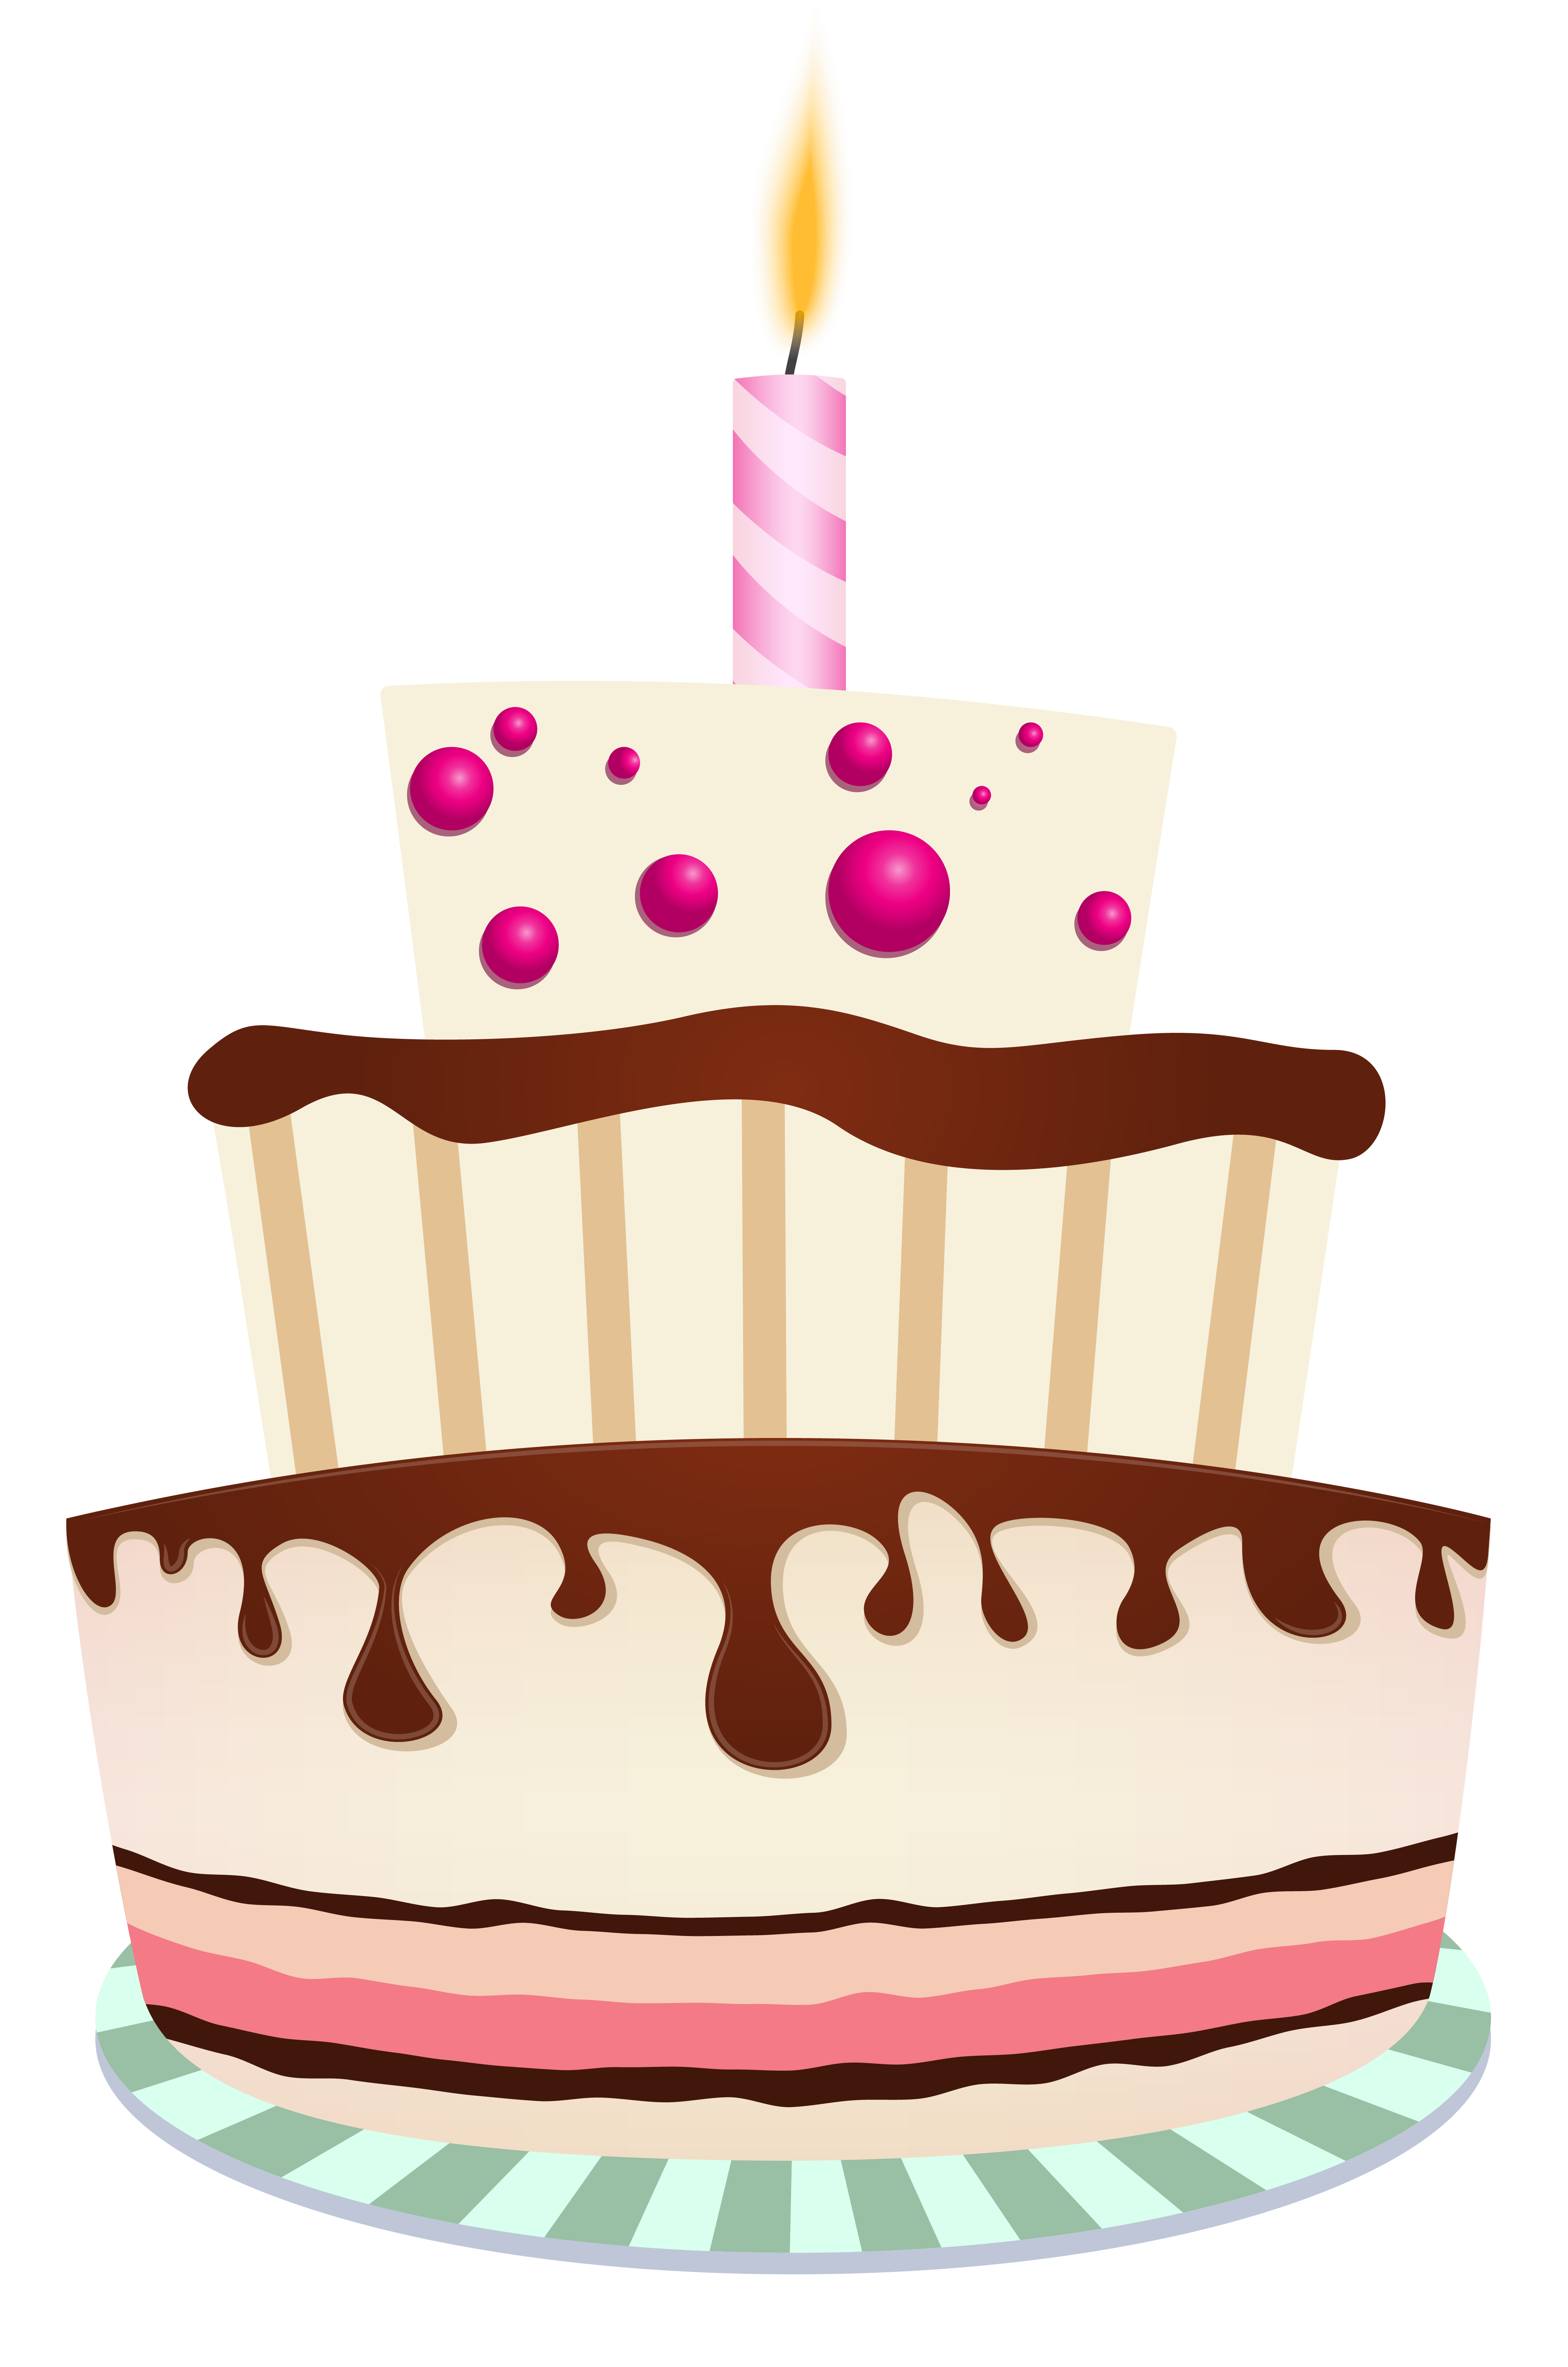 Cream Sour Birthday Cake Png - 5177 - TransparentPNG